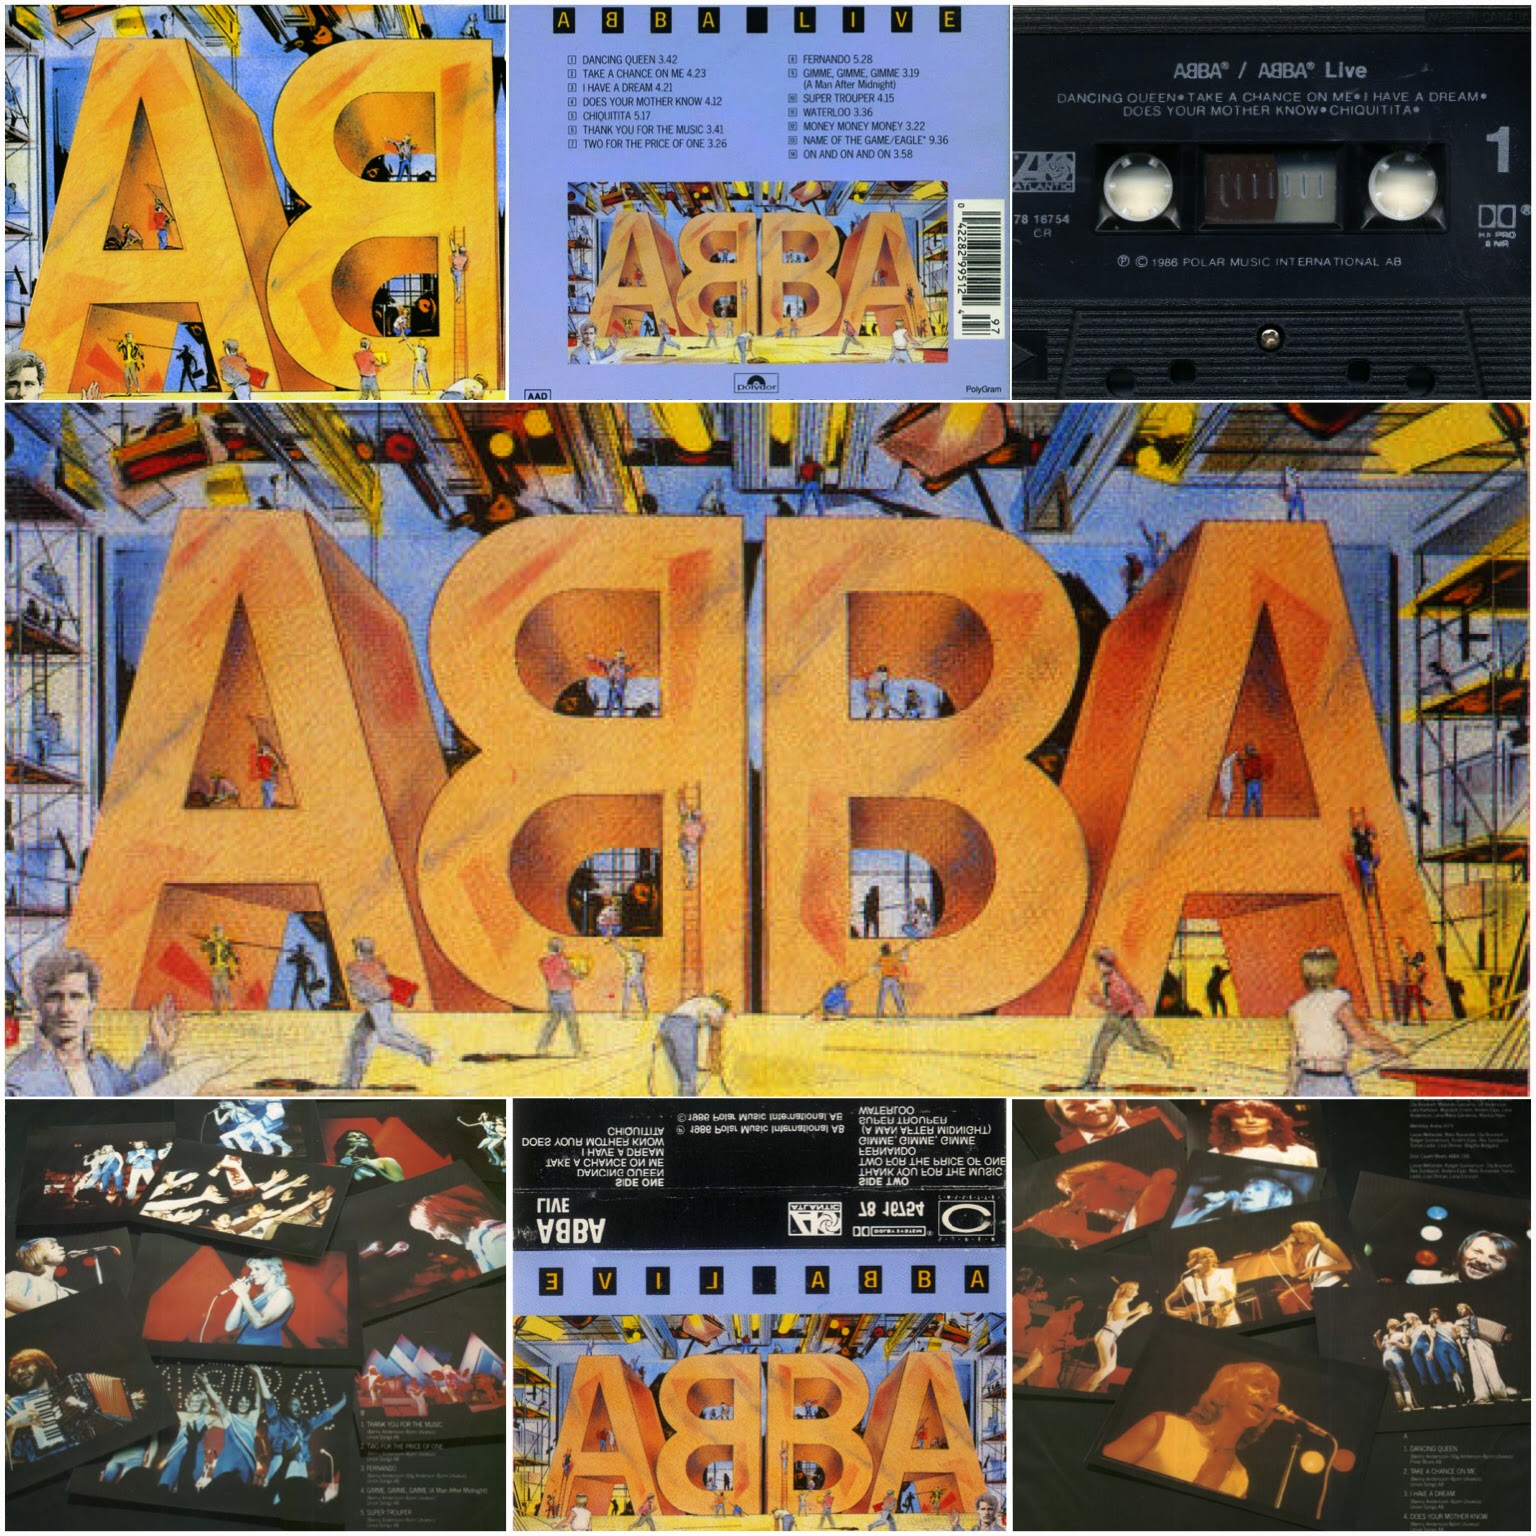 ABBA Fans Blog: 18th August 1986 - Abba Live